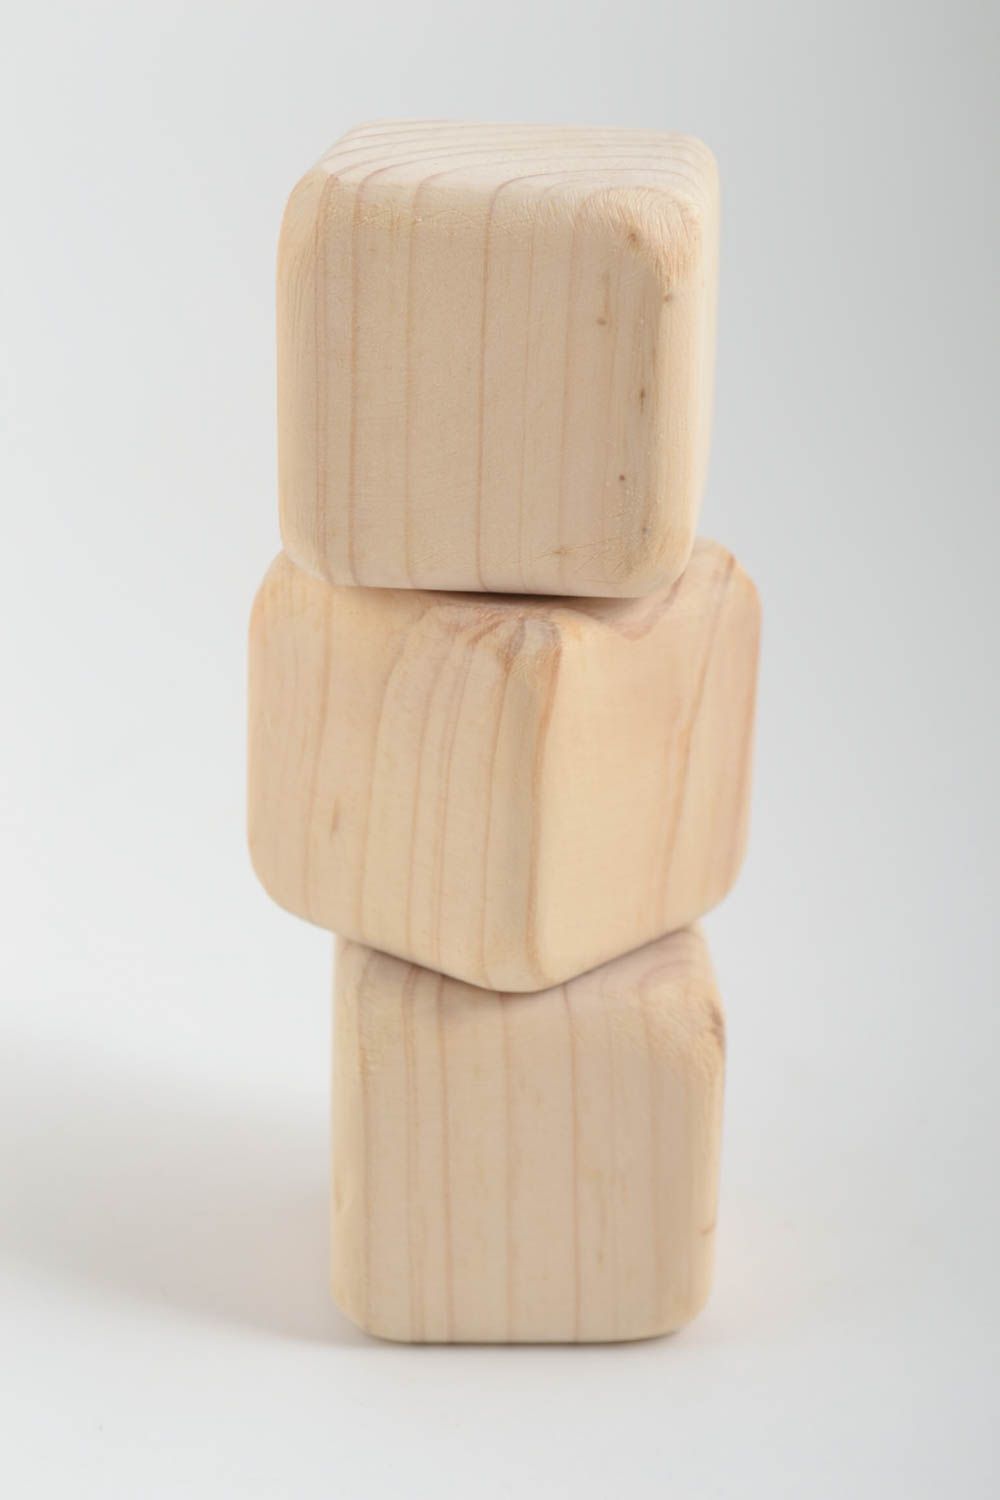 Handmade toy blocks toy blocks for baby wooden toy blocks set of 3 items photo 2